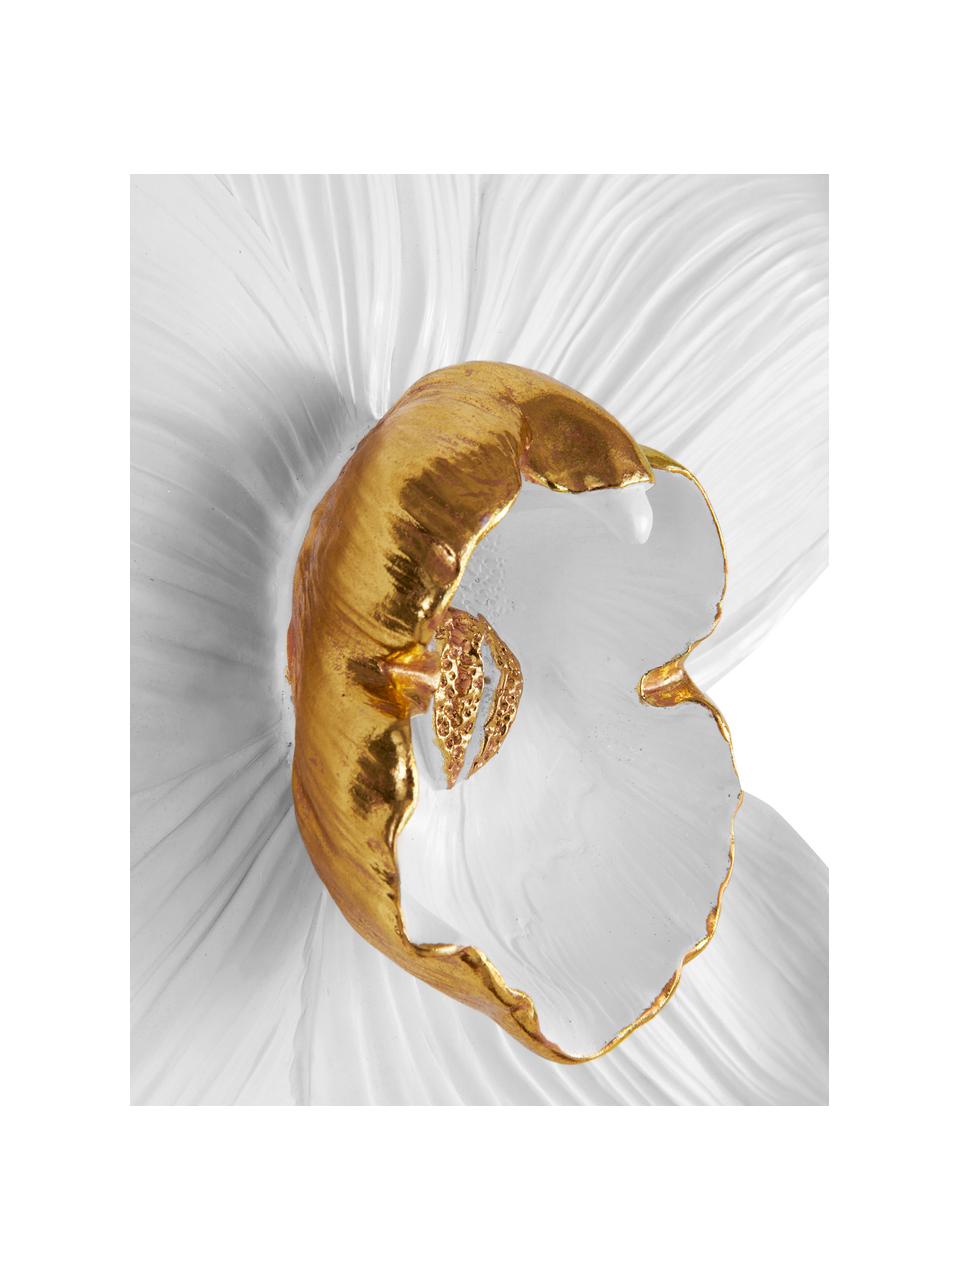 Oggetto da parete bianco/dorato Orchid, Poliresina, Bianco, dorato, Larg. 25 x Alt. 24 cm